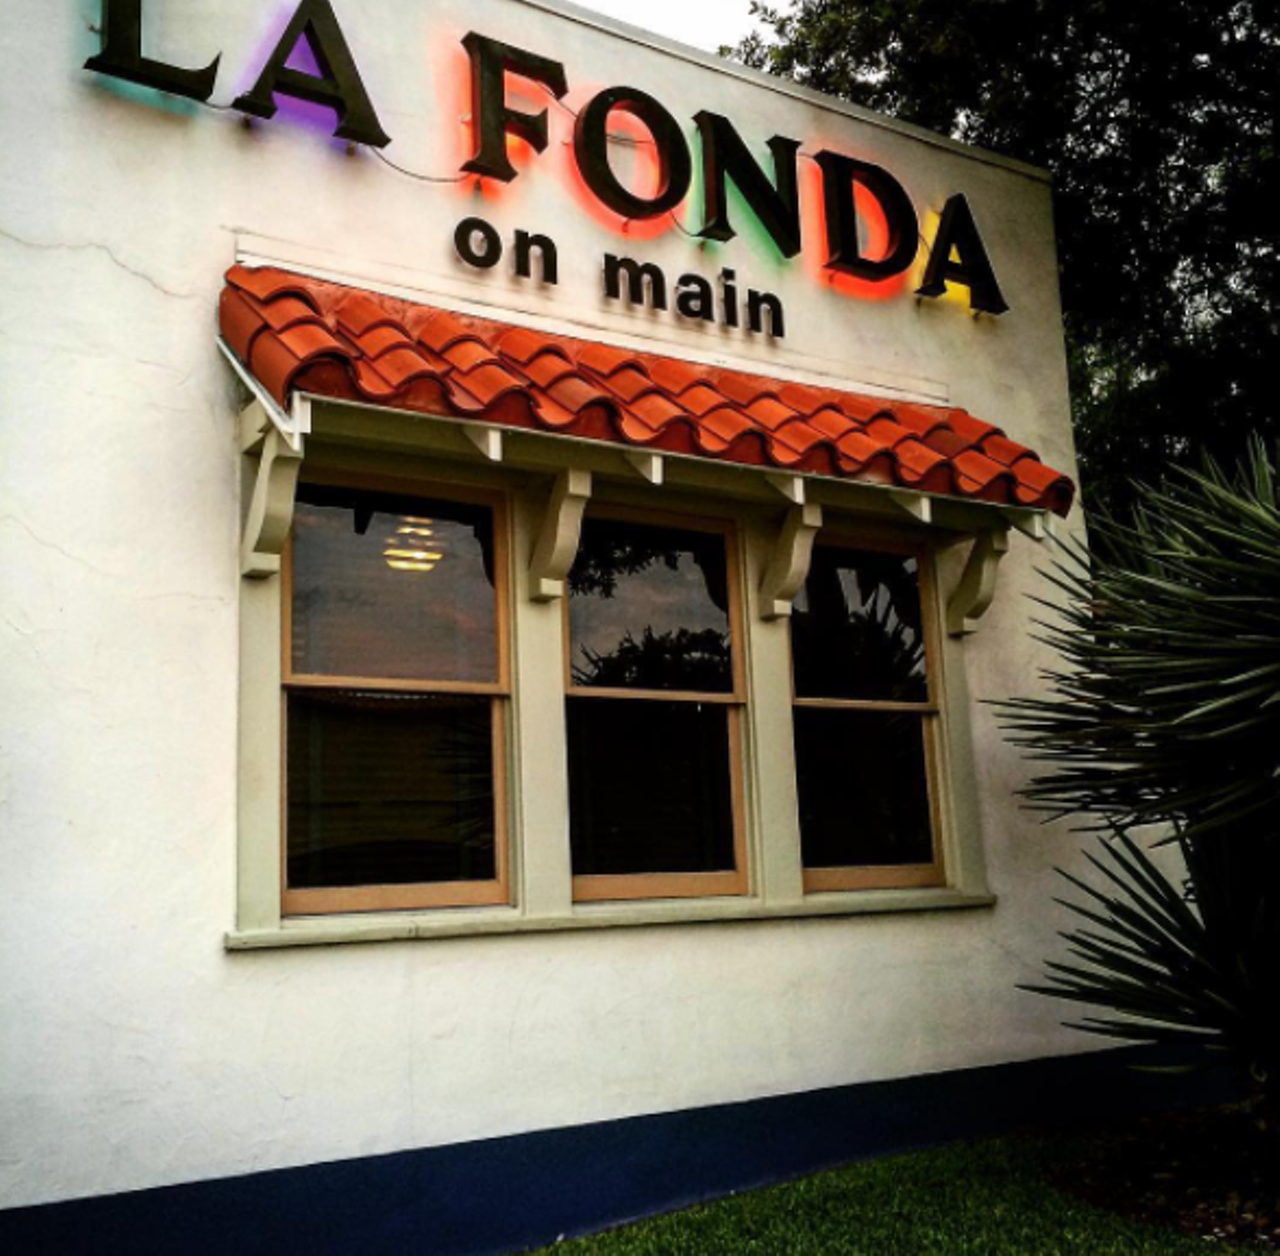 La Fonda on Main
2415 N. Main Ave.,  (210) 733-0621,  lafondaonmain.com
Because sometimes you want to be classy when you're eating nachos. 
Photo via Instagram,  
homerovato